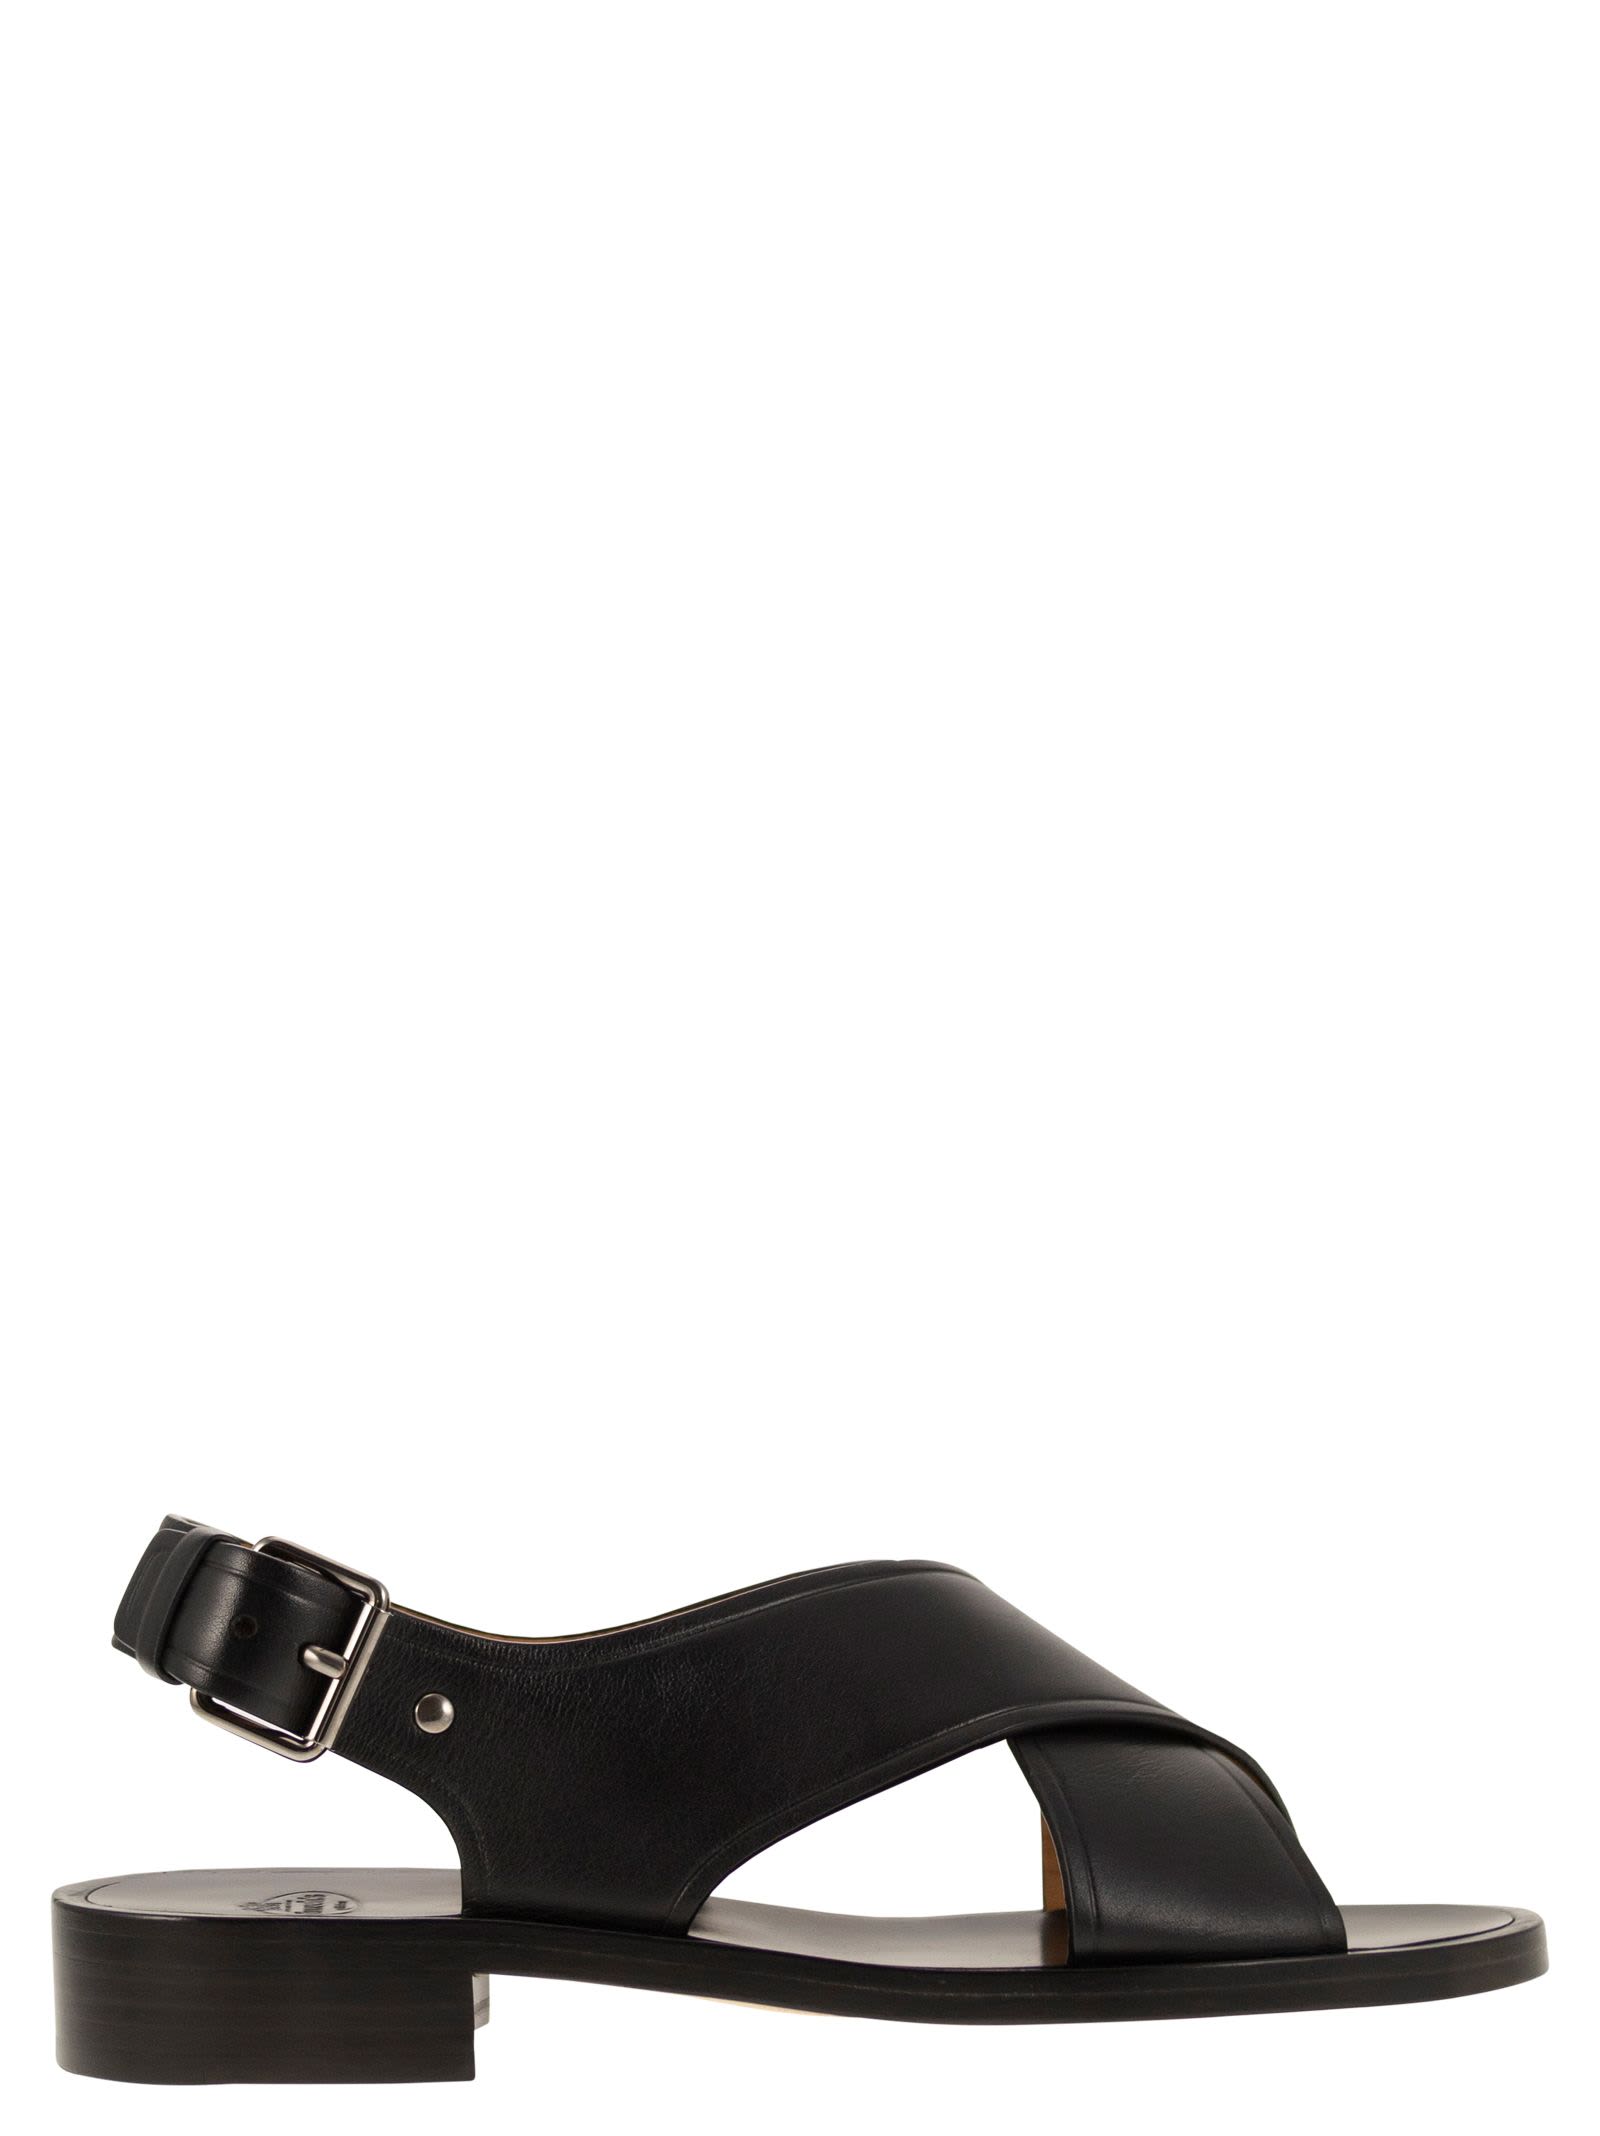 Black Leather Rhonda Sandals